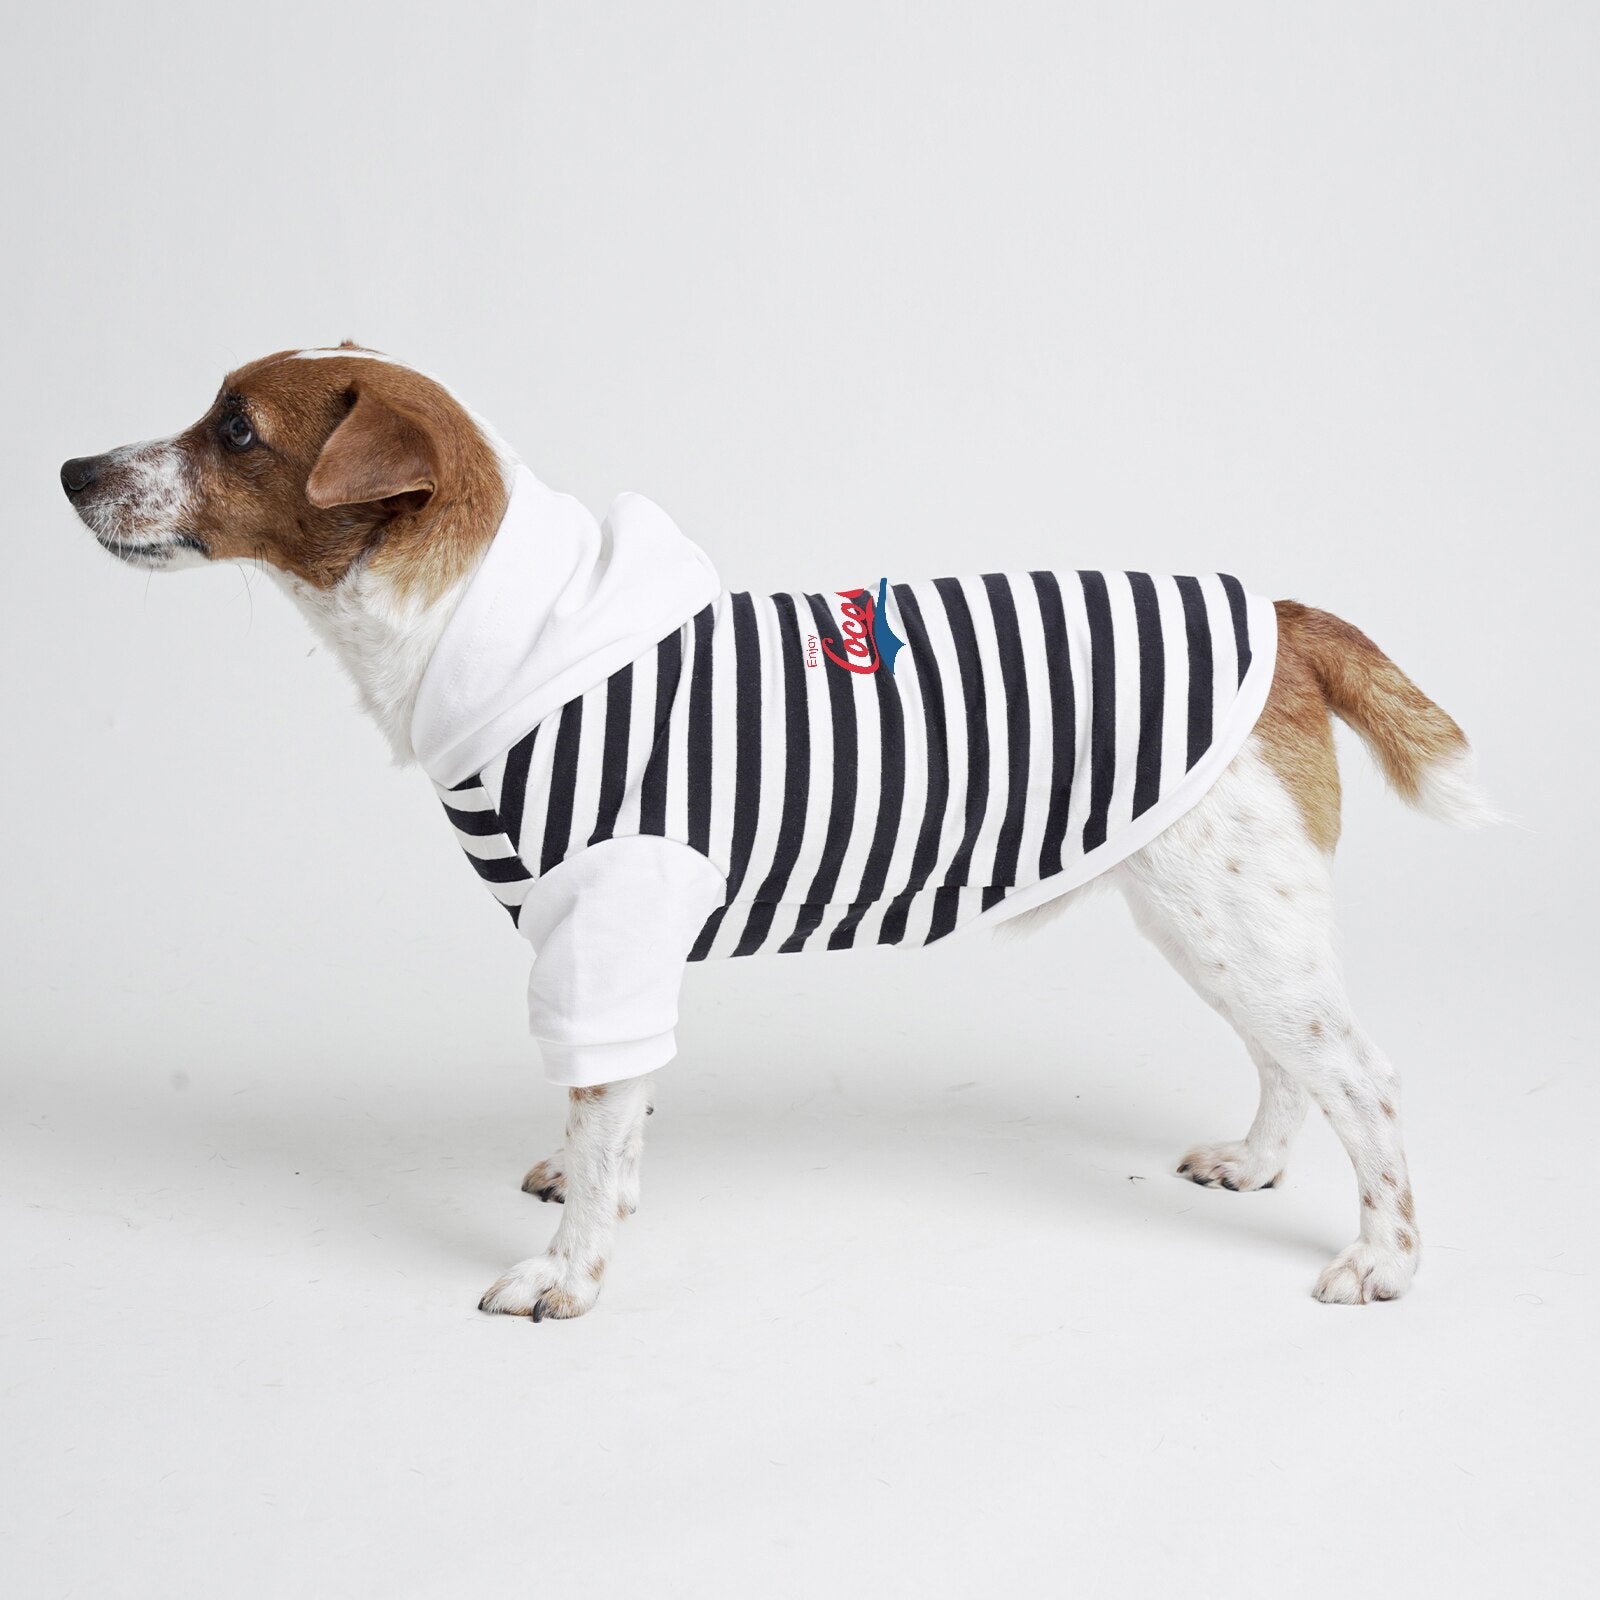 Pet Hoodie Letter 'Coco' Print Clothes for Small Medium Big Dogs Zebra Stripe White Leash Hole Design Soft Cotton Fabric